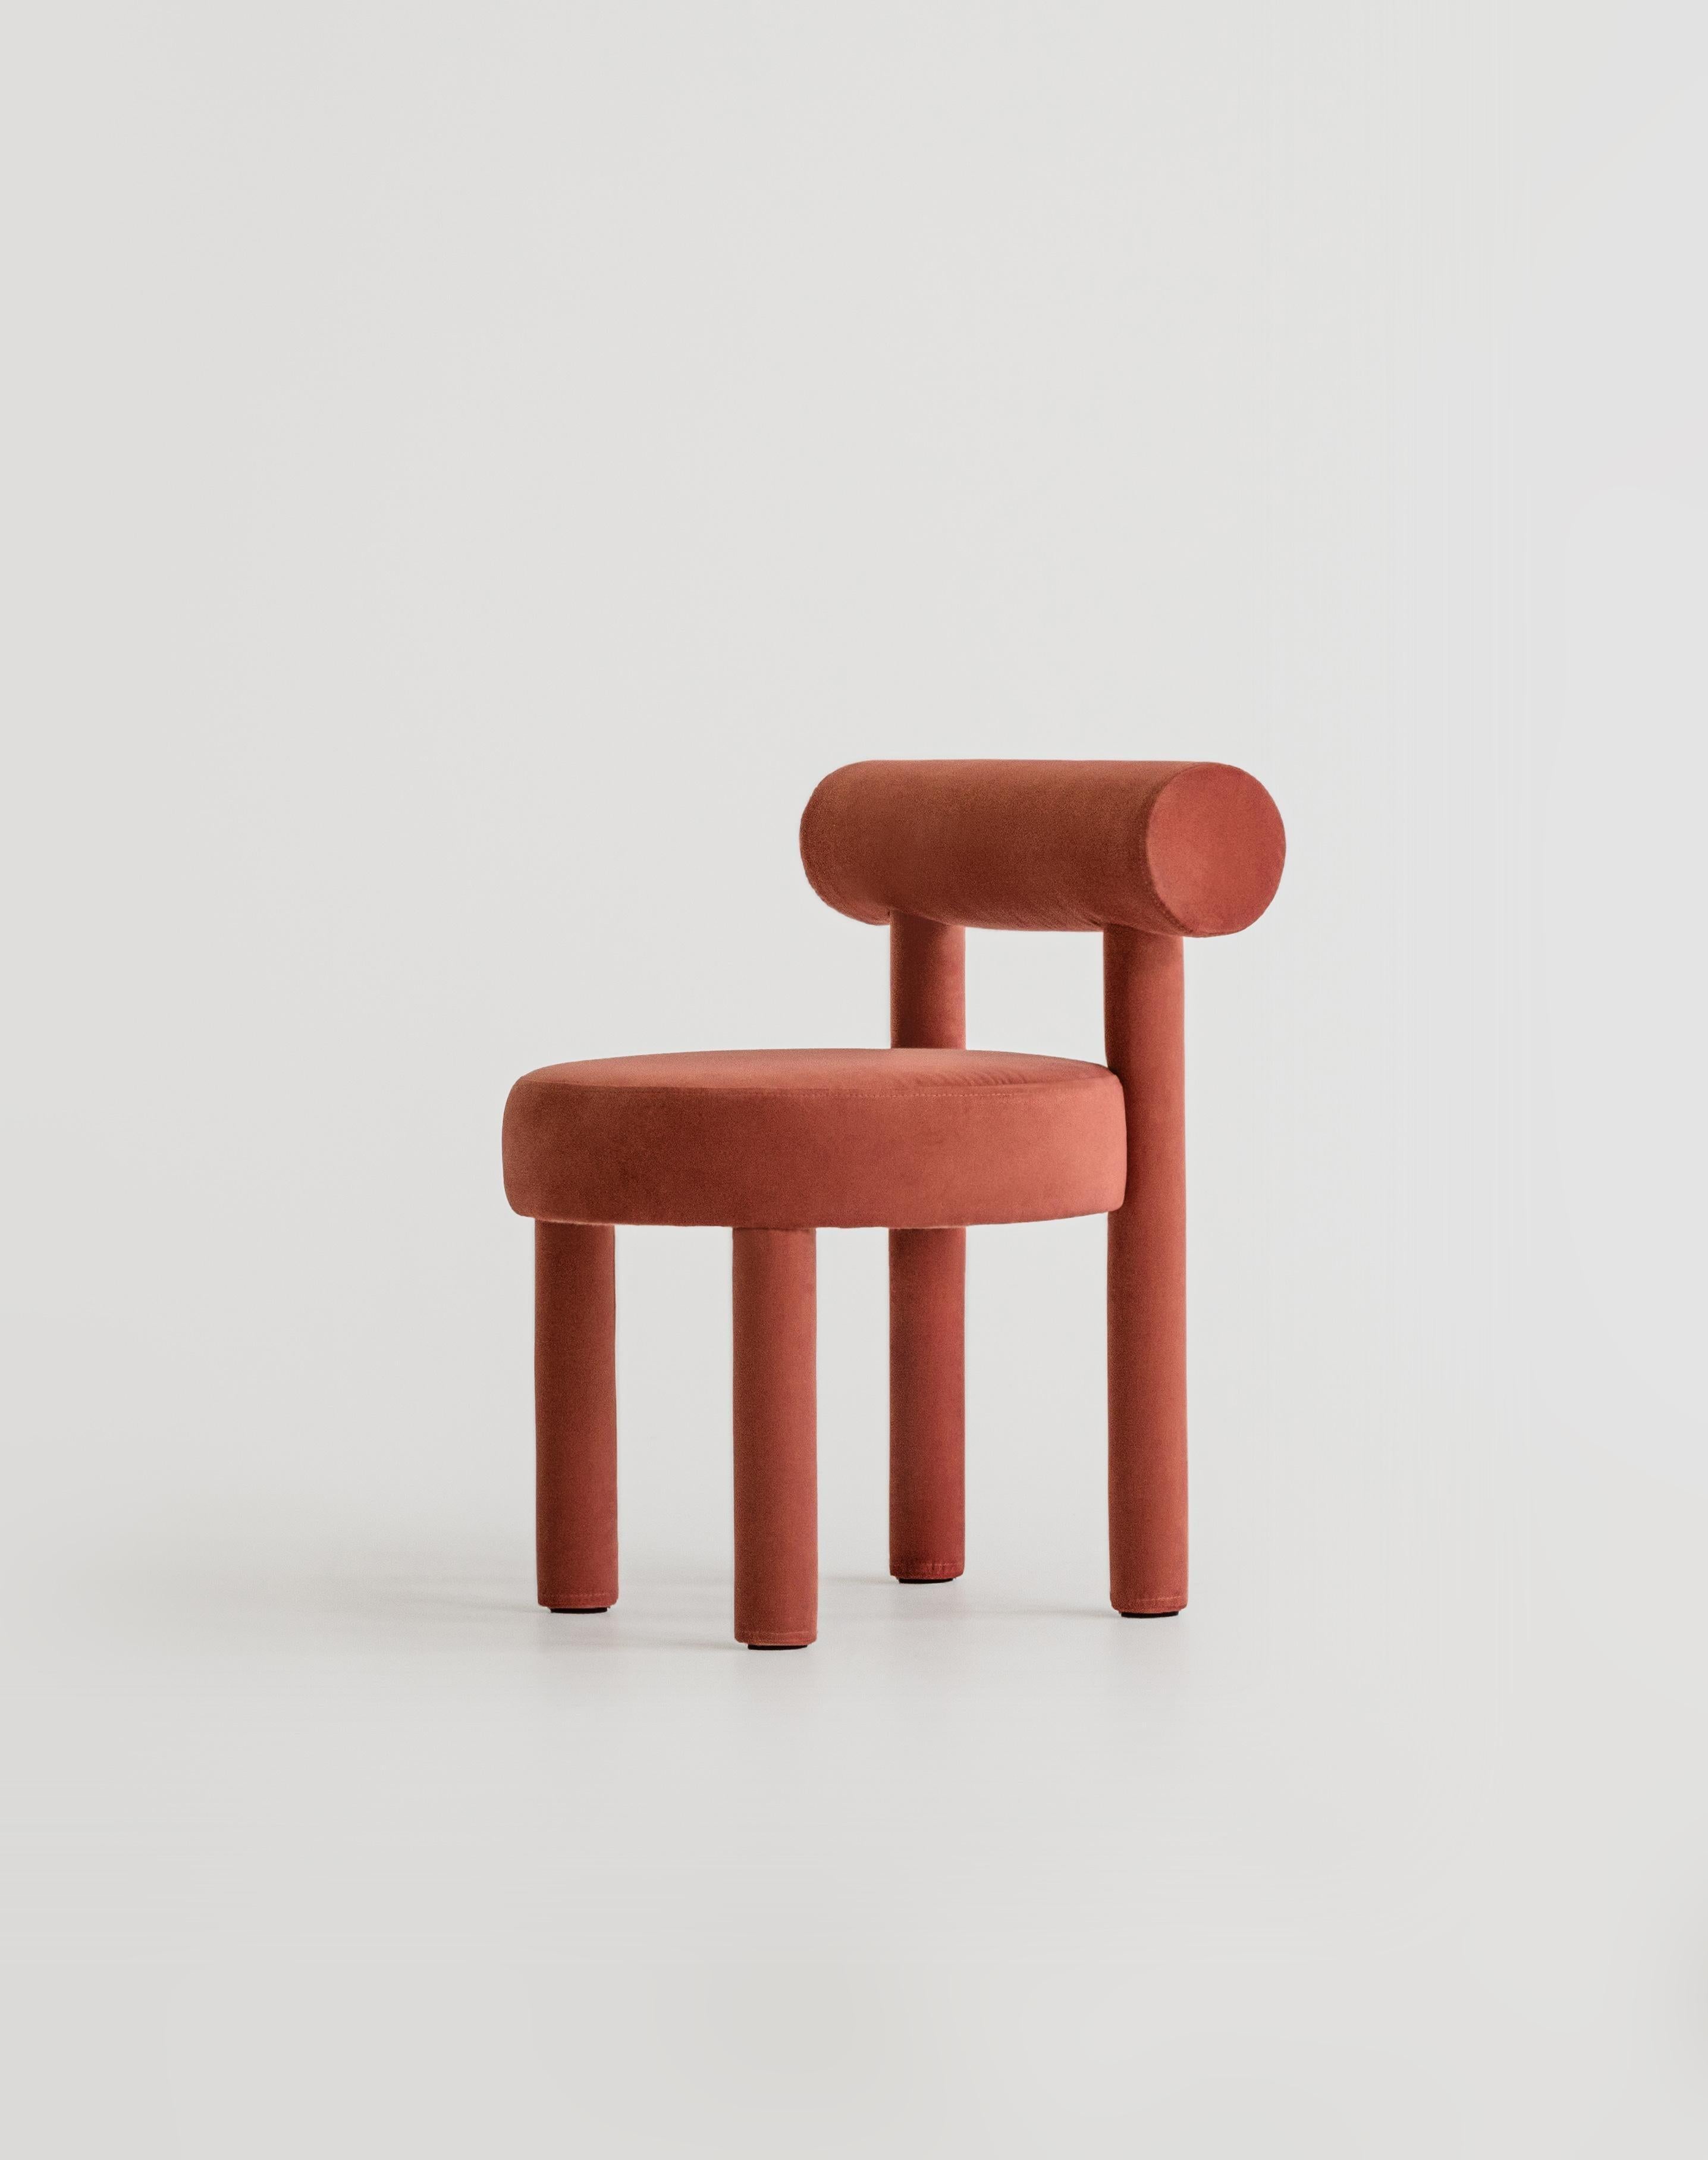 Organic Modern Contemporary Chair Gropius CS1 by Noom, Red Velvet  For Sale